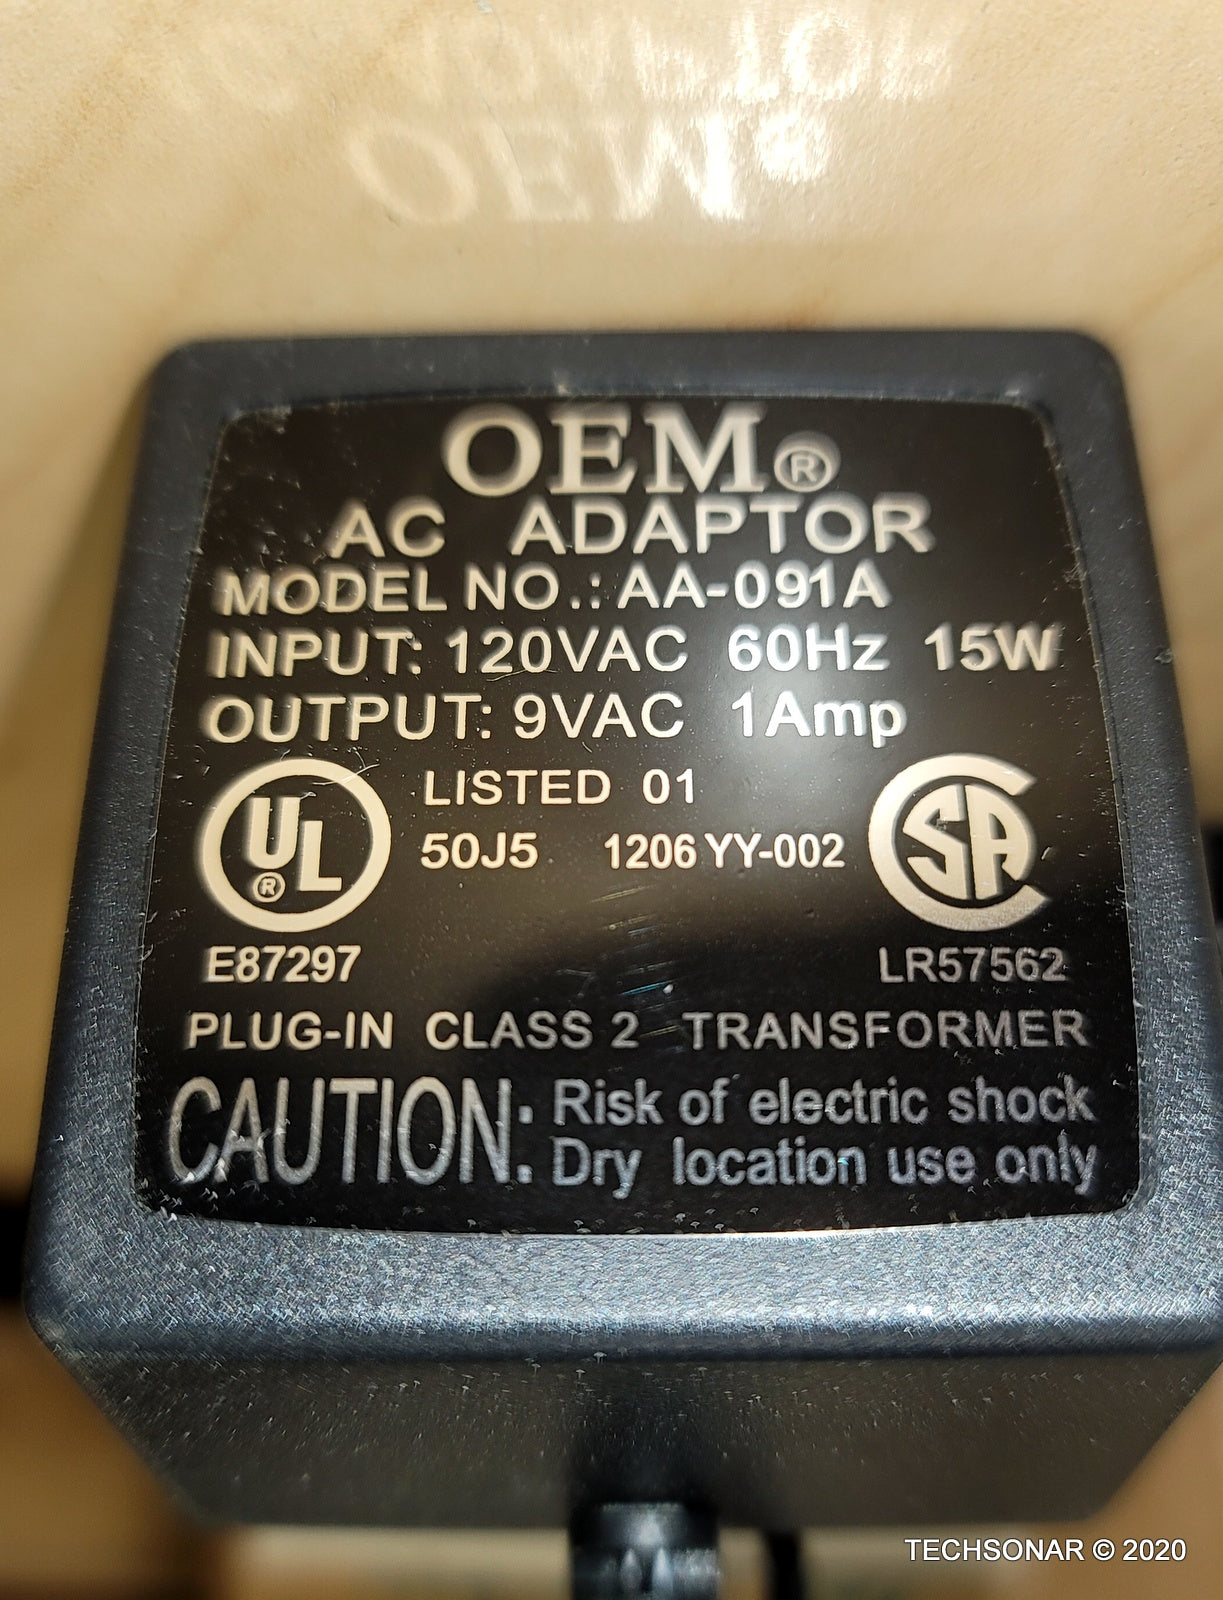 LOT of 2 OEM MODEL AA-091A TRANSFORMER TYPE AC/AC ADAPTOR output 9VAC 1Amp